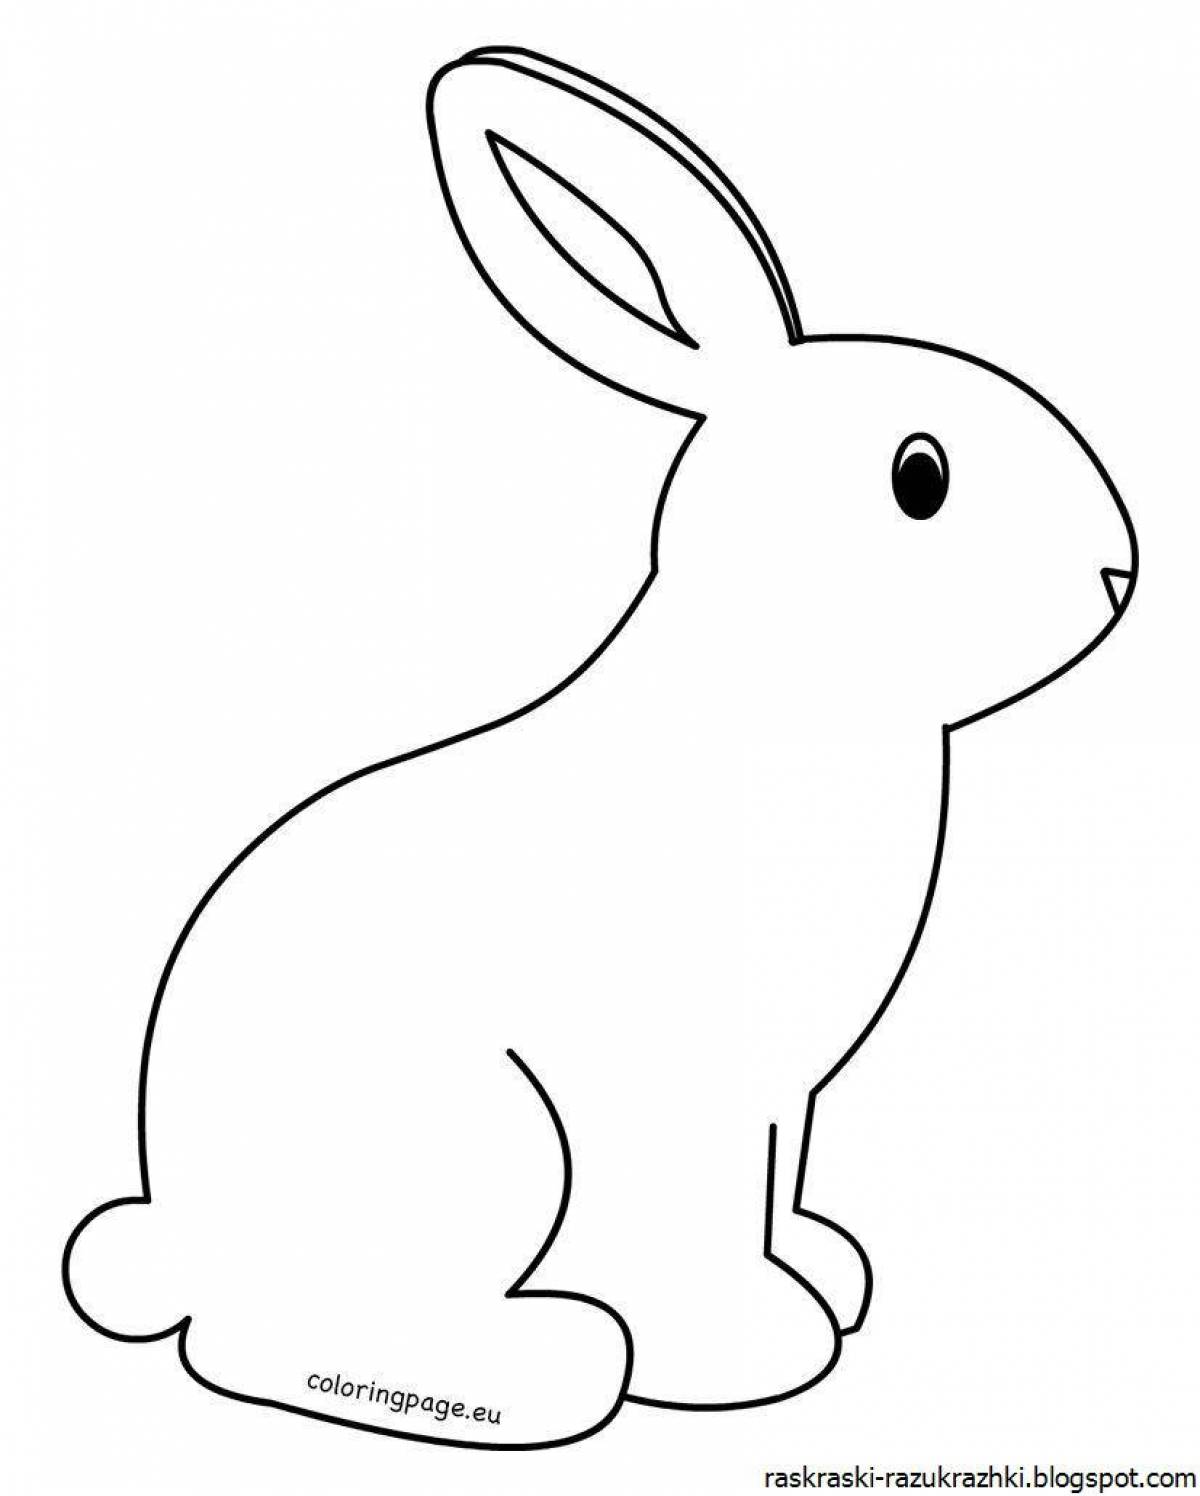 Fun coloring hare picture